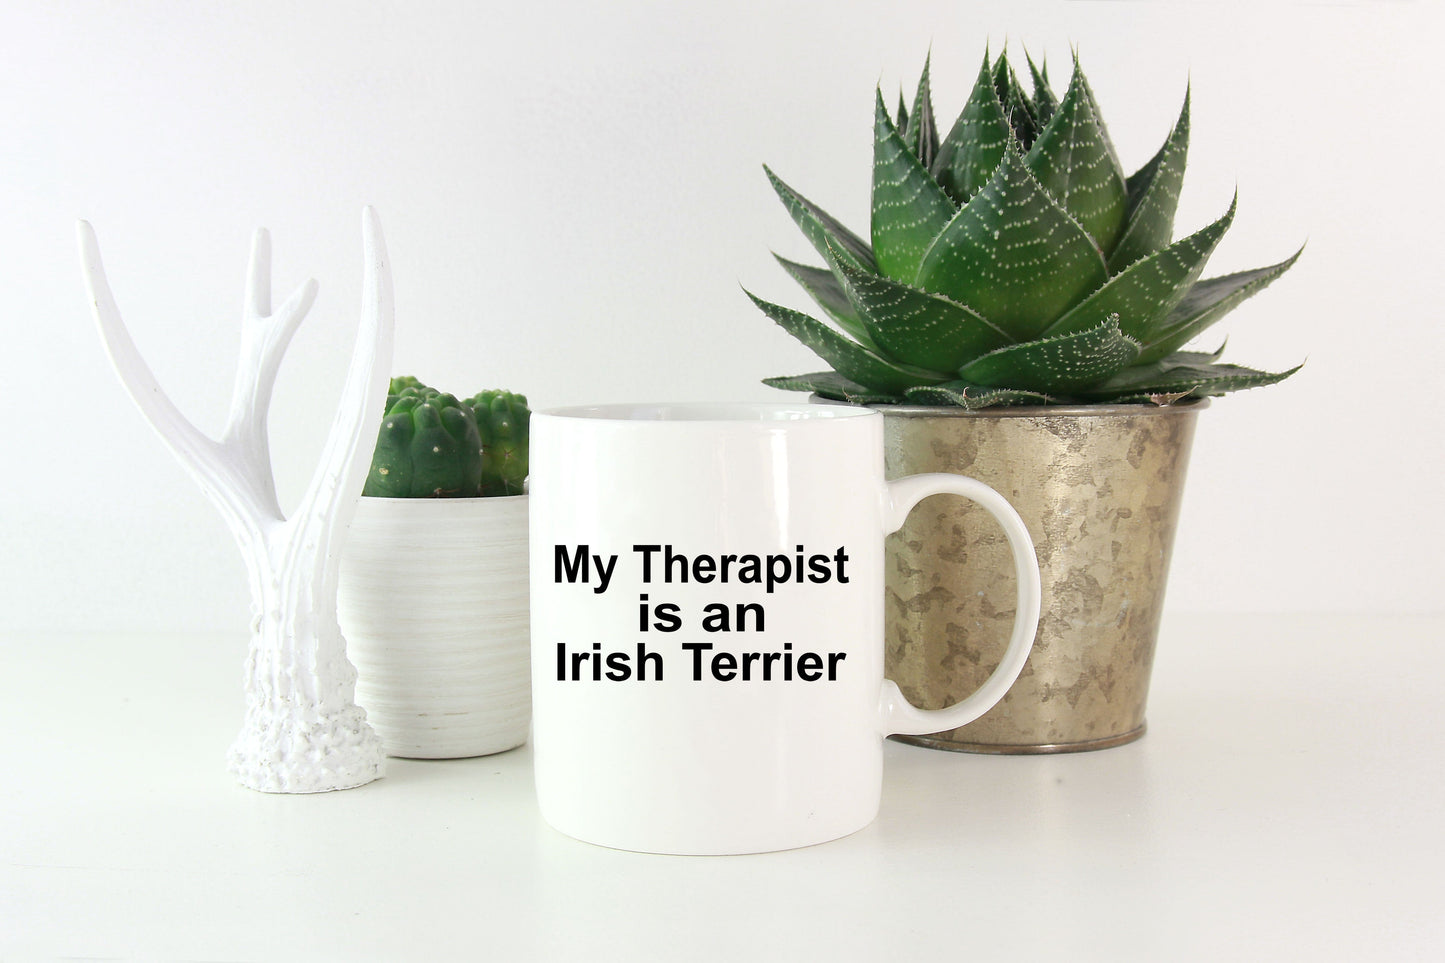 Irish Terrier Dog Owner Lover Funny Gift Therapist White Ceramic Coffee Mug